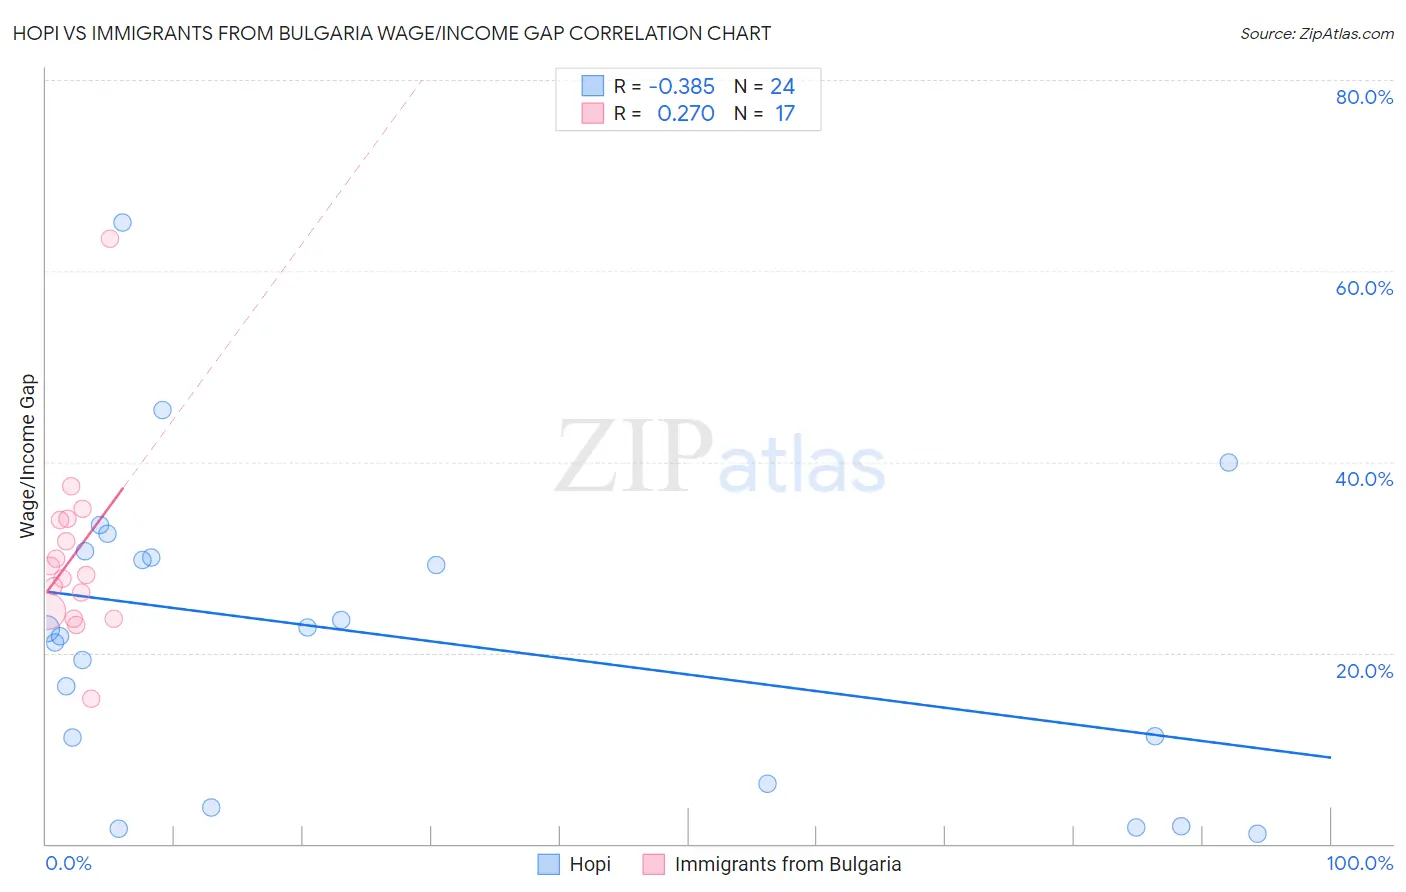 Hopi vs Immigrants from Bulgaria Wage/Income Gap